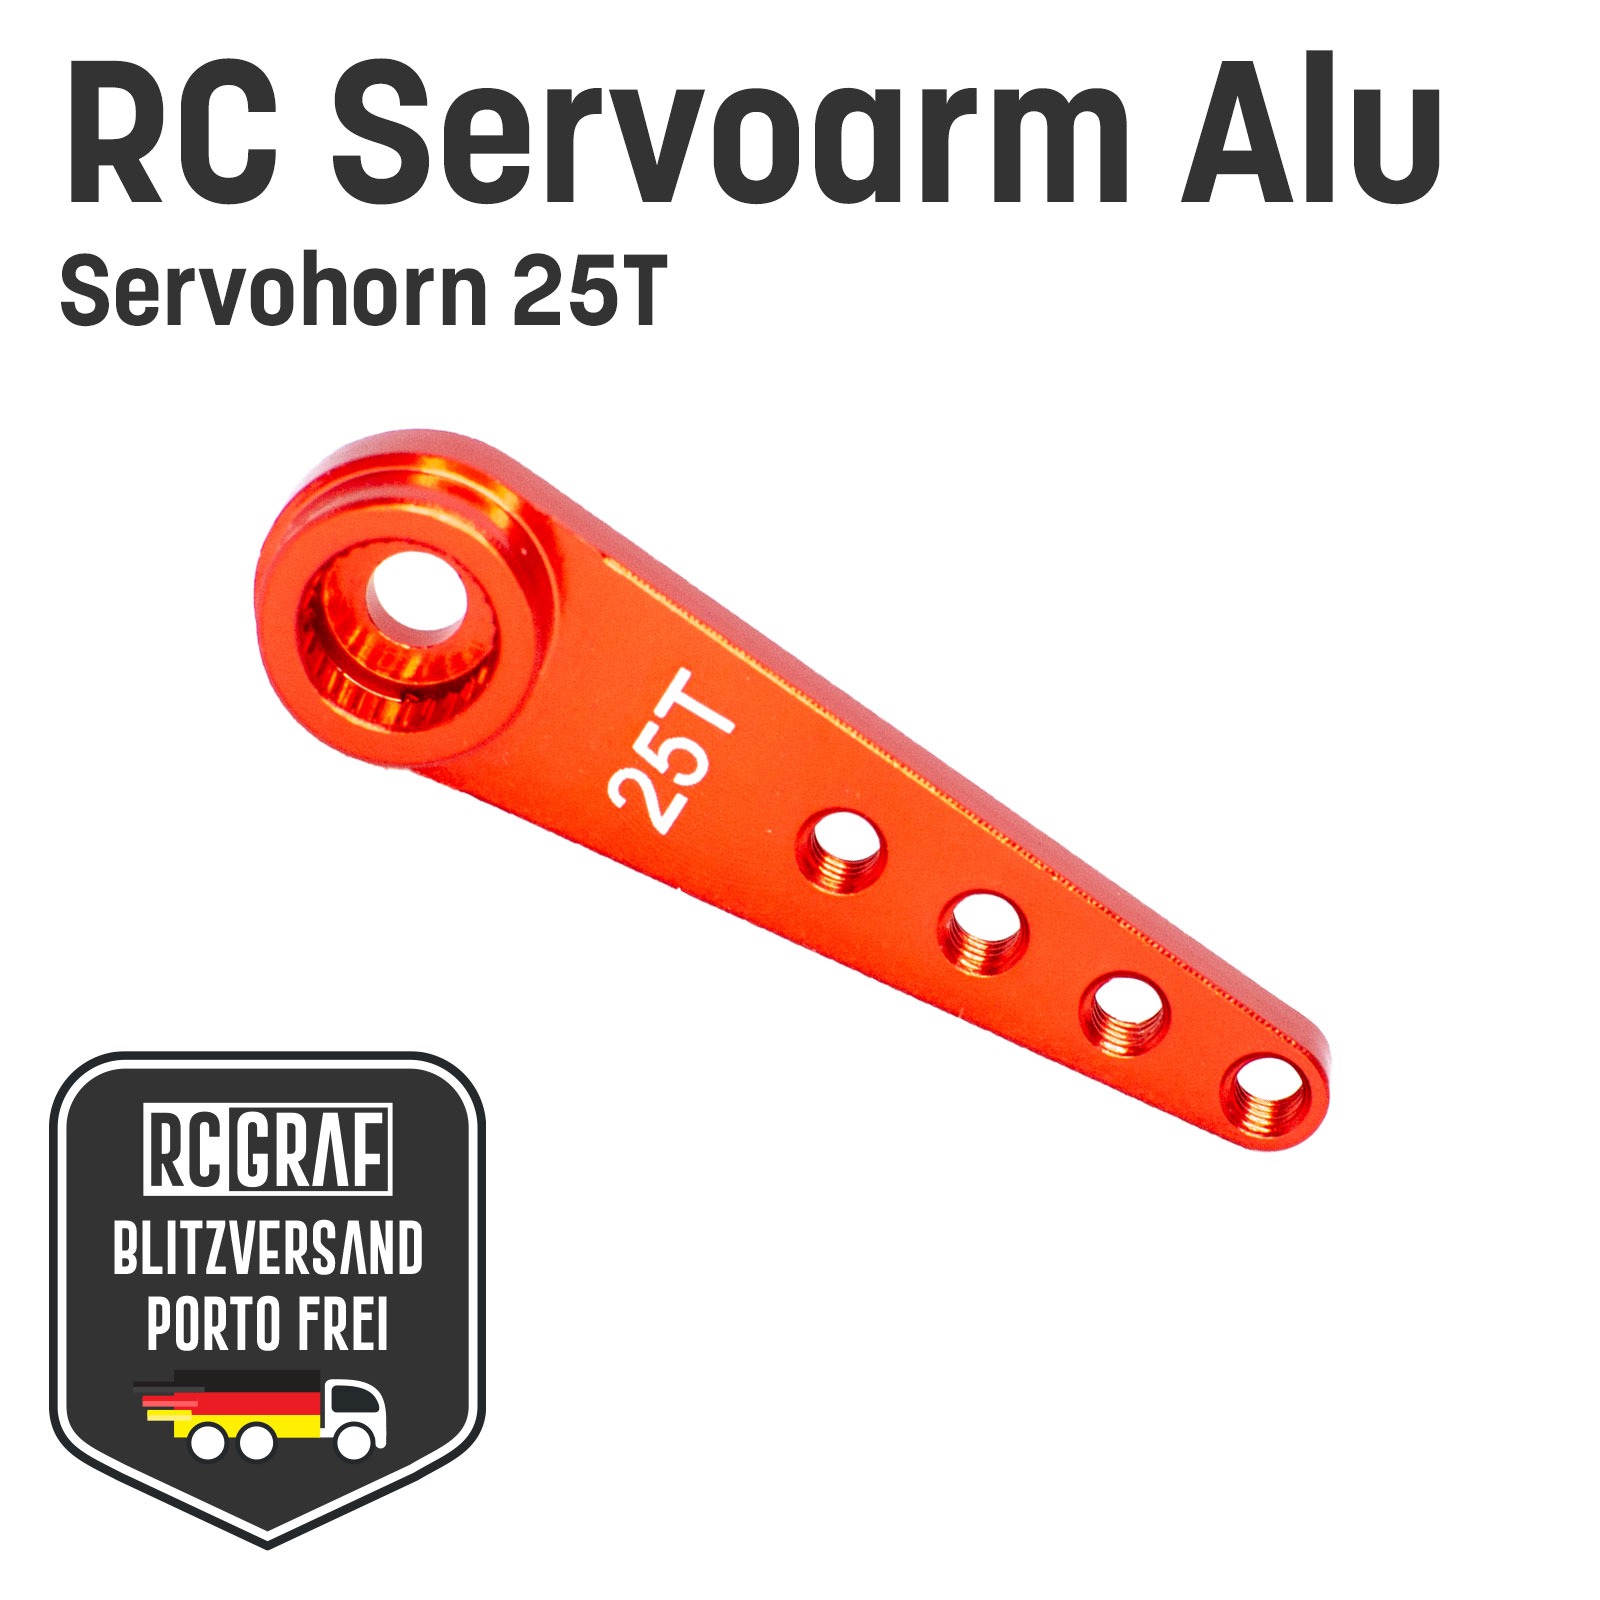 RC Servoarm Servohorn 25T Servohebel Alu Rot